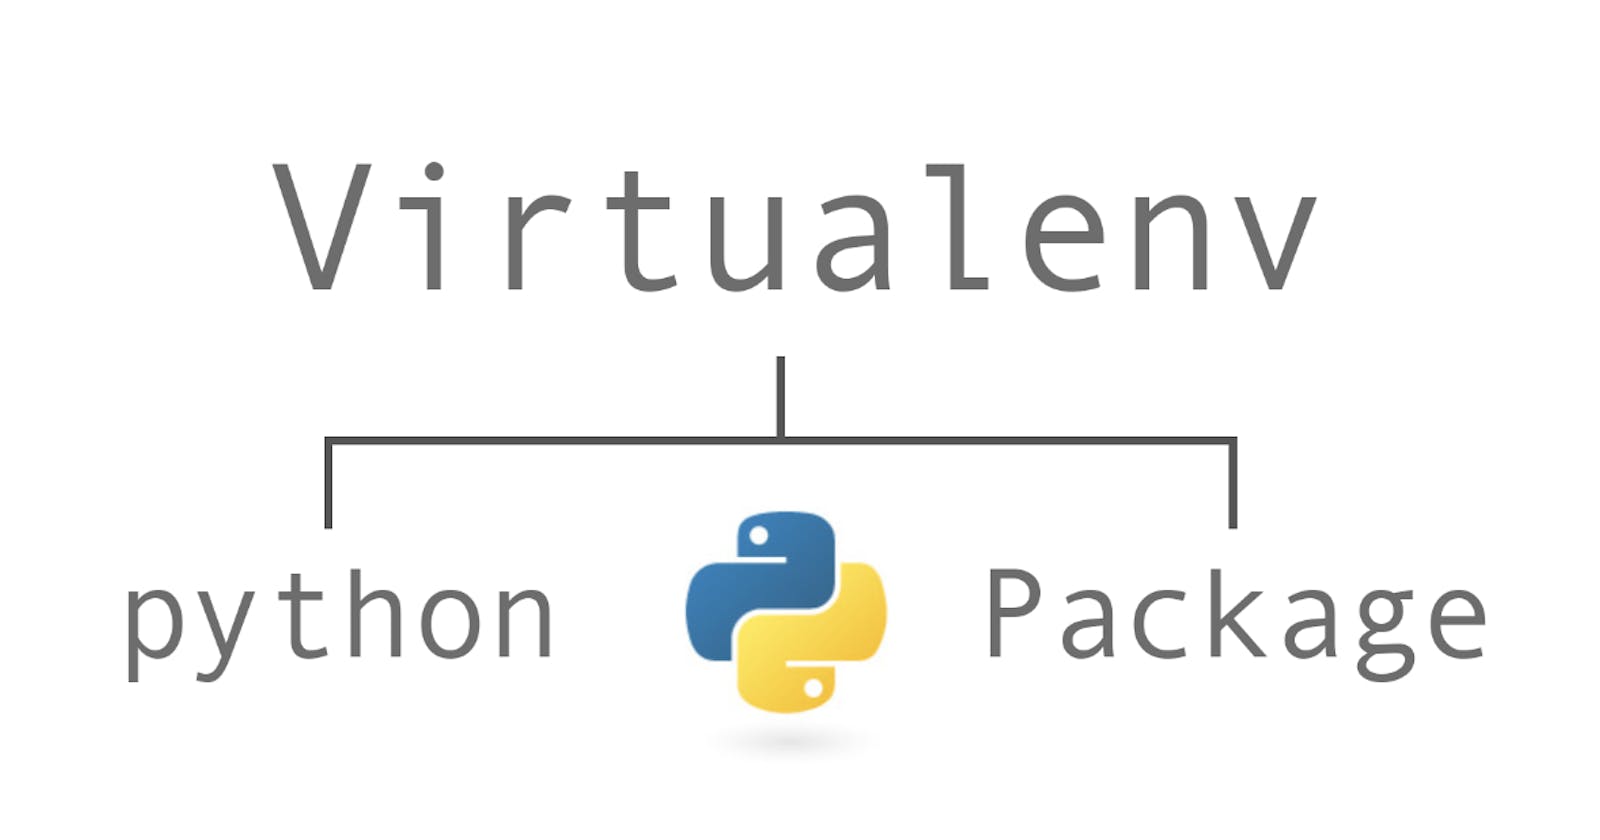 Creating Virtual Environment in Python